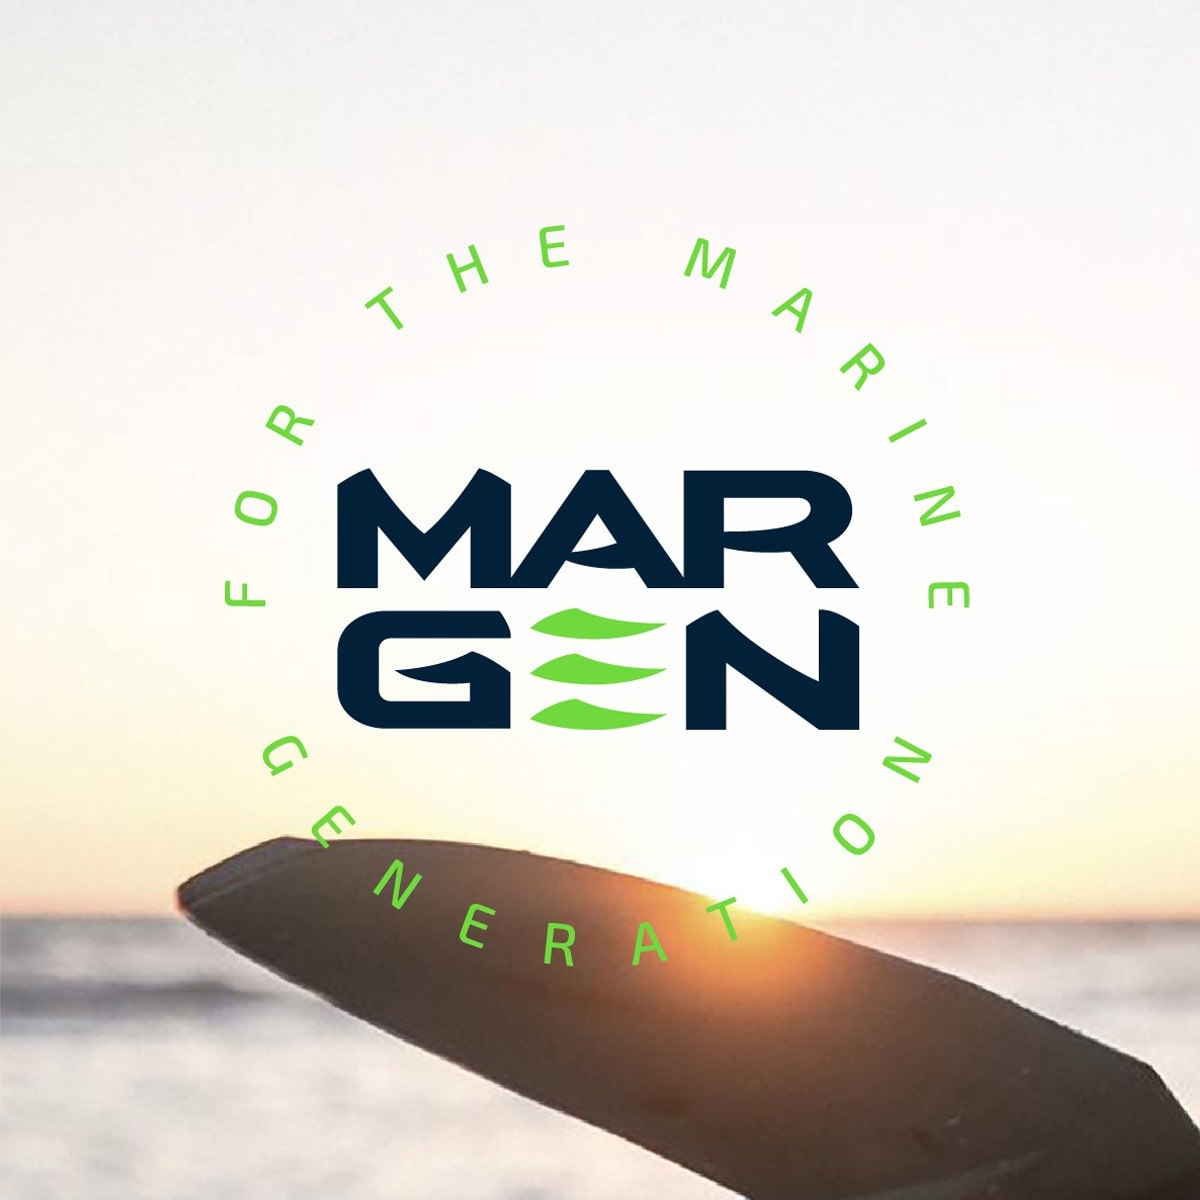 Margen-logo-Lockup-Overlay